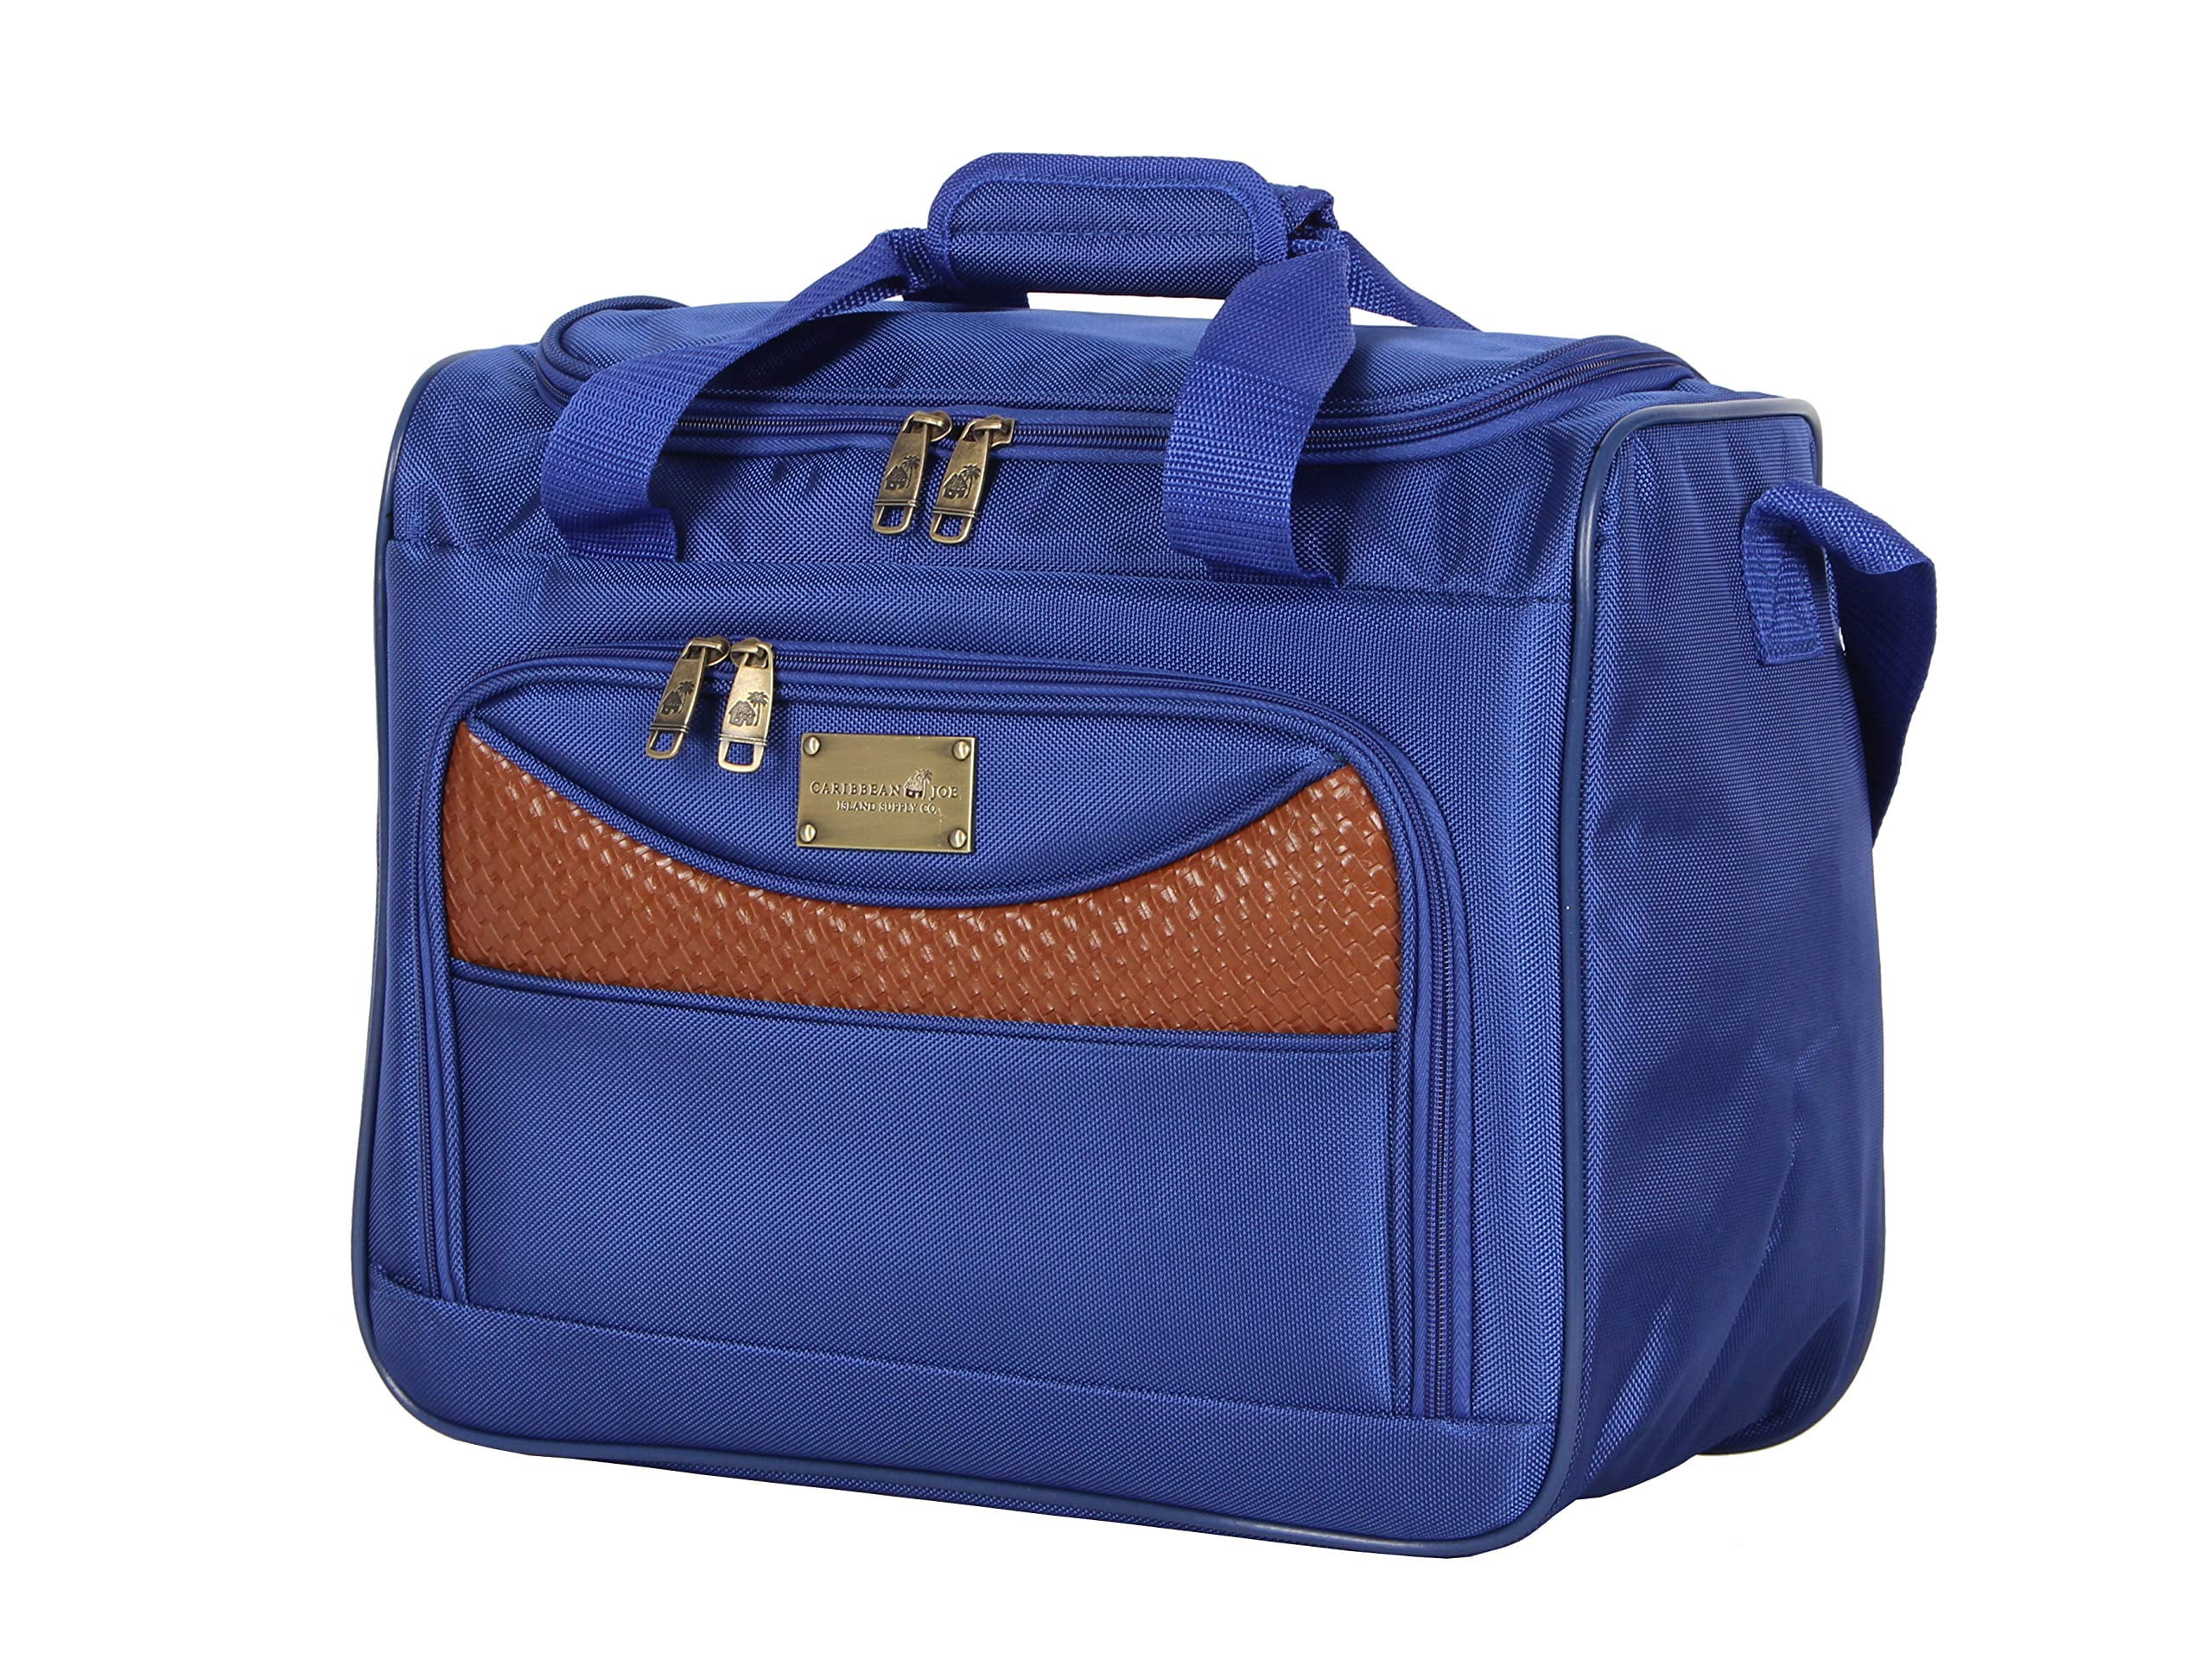 Caribbean Joe Luggage Castaway Suitcase 16 Boarding Tote (Royal Blue)